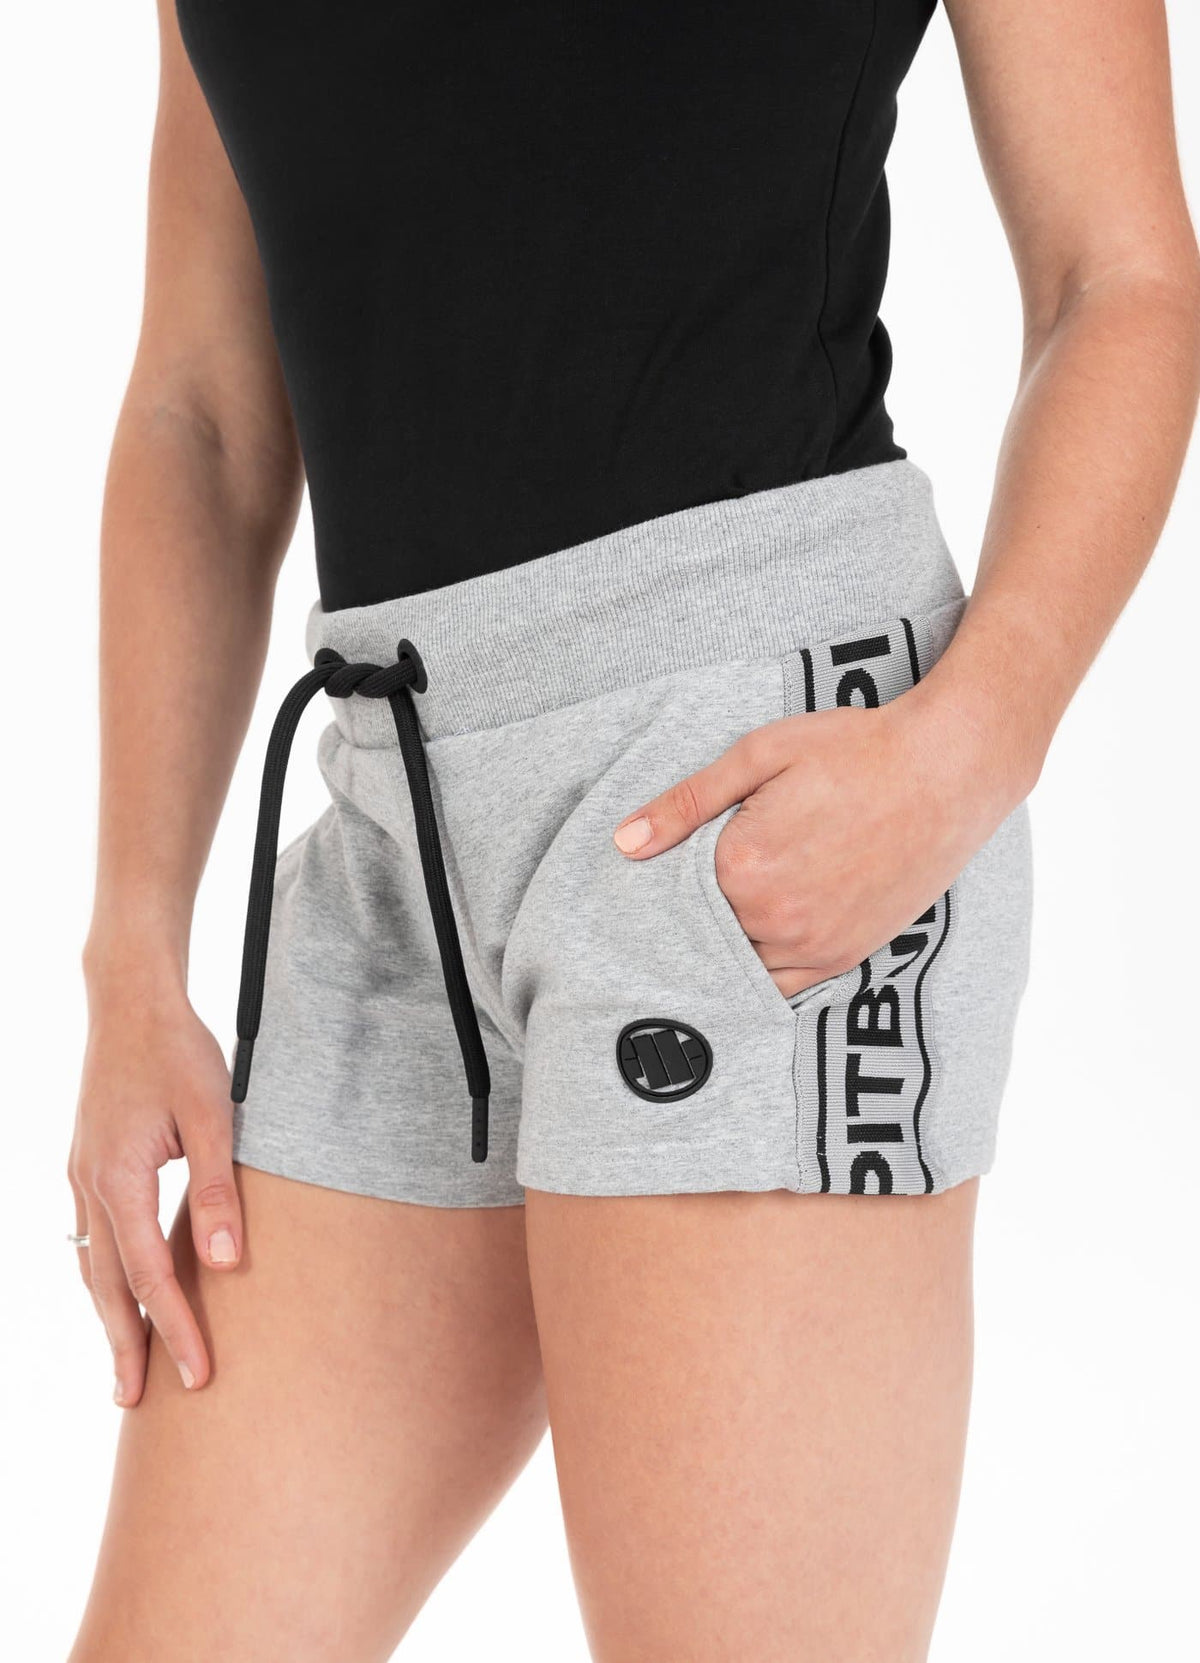 Women's shorts SMALL LOGO FRENCH TERRY 21 Grey - Pitbull West Coast International Store 